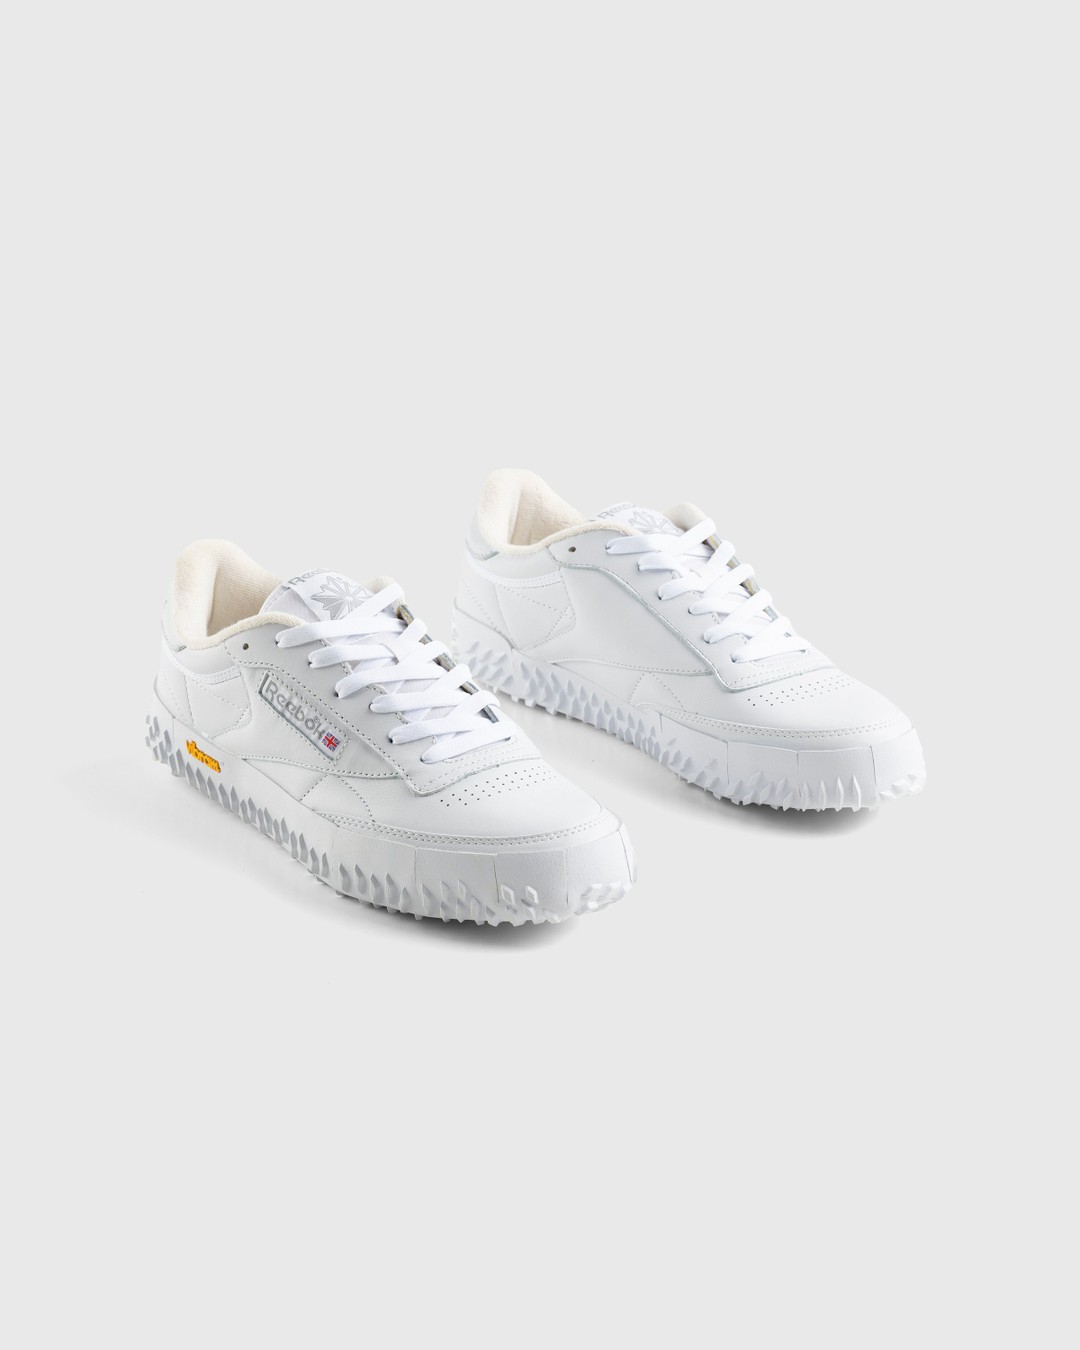 Reebok – Club C Vibram White - Low Top Sneakers - White - Image 3